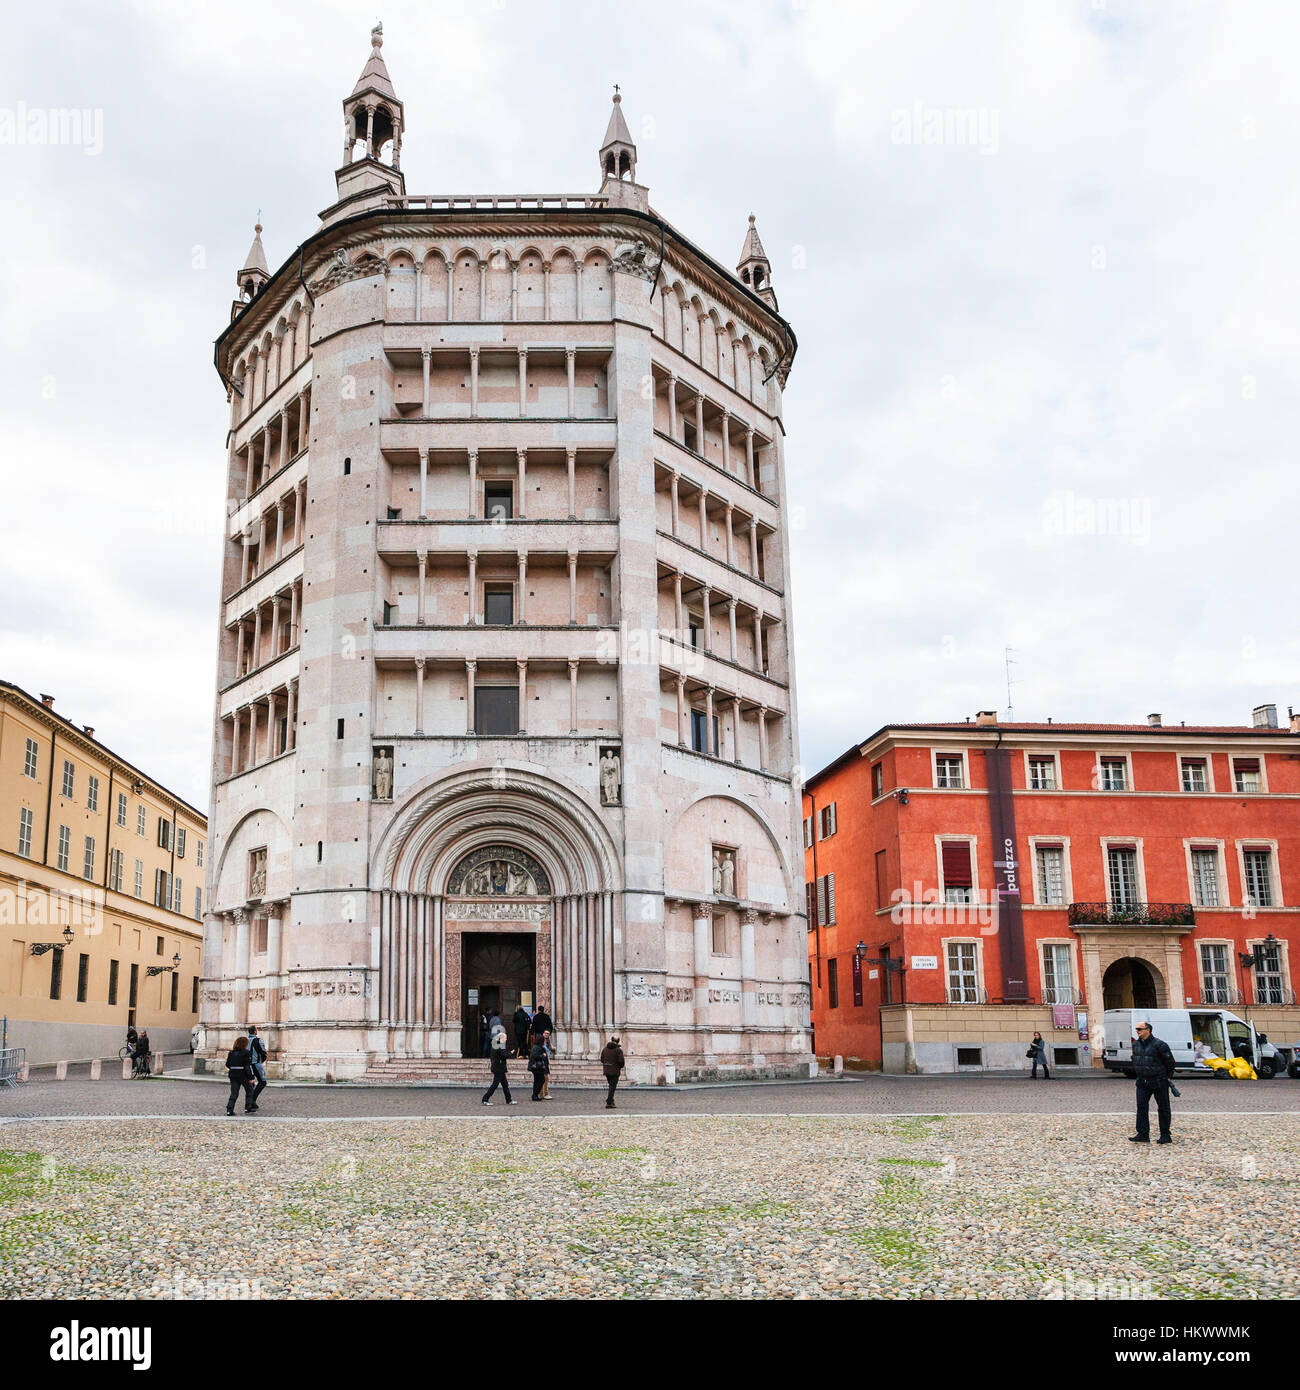 PARMA (Italien)-3. November 2012: Ansicht des Baptisterium am Piazza del Duomo in Parma Stadt. Bau des Baptisterium begann 1196 von Antelami. Stockfoto